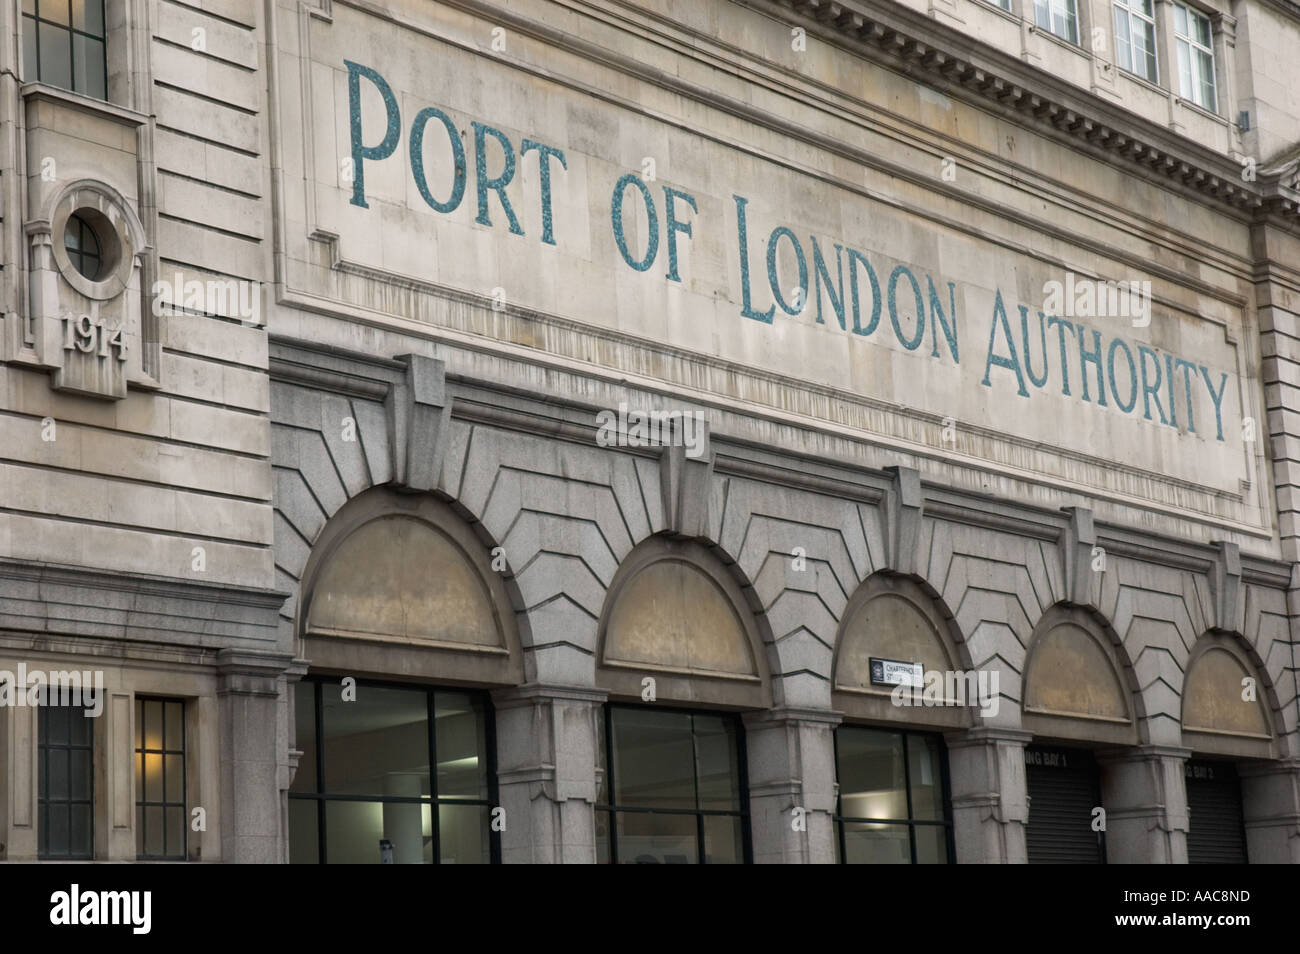 Port of London Authority building in Charterhouse Street Smithfield London UK Stock Photo